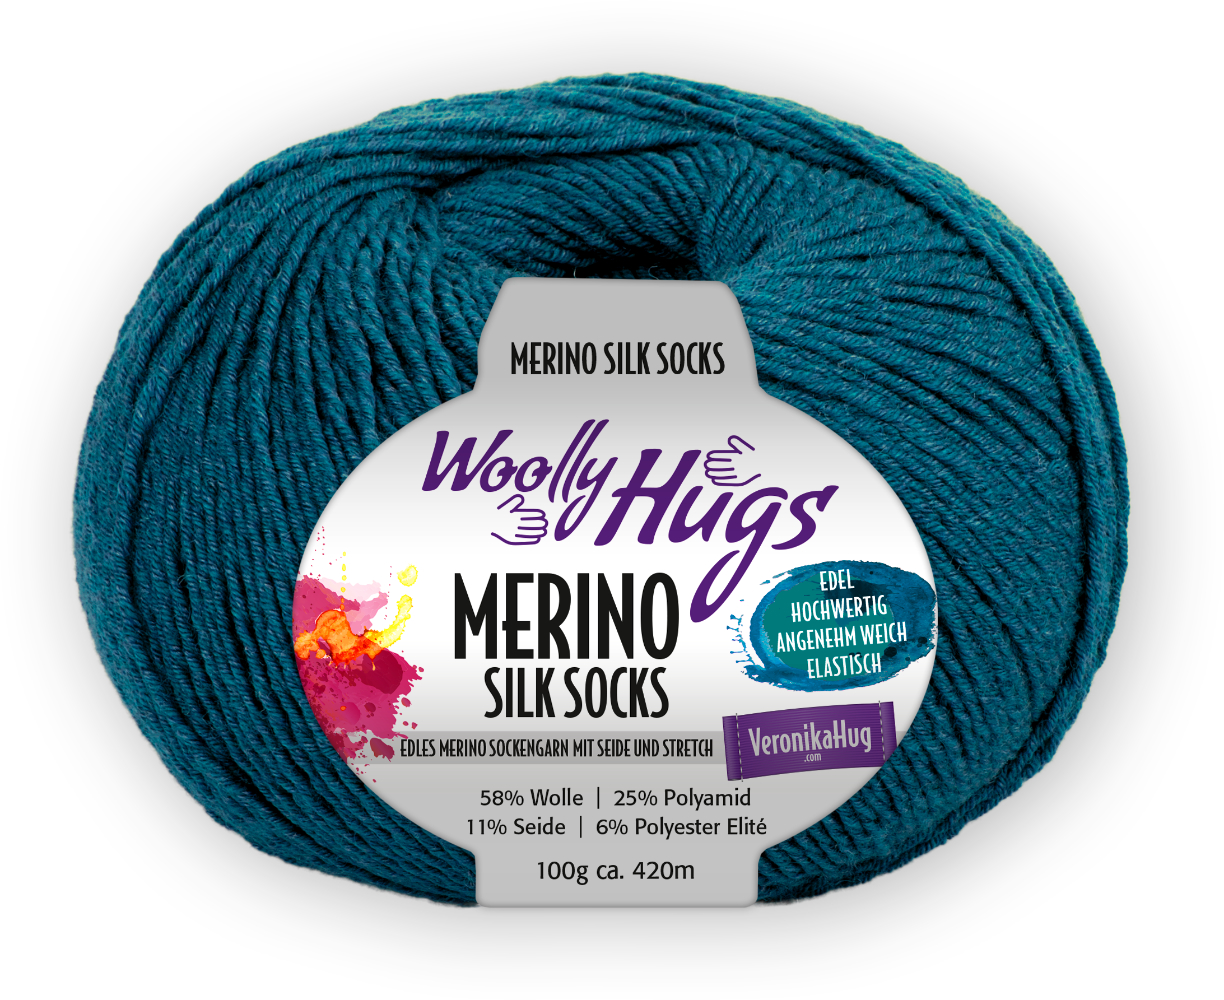 Merino Silk Socks Stretch, 4-fach von Woolly Hugs 0266 - smaragd